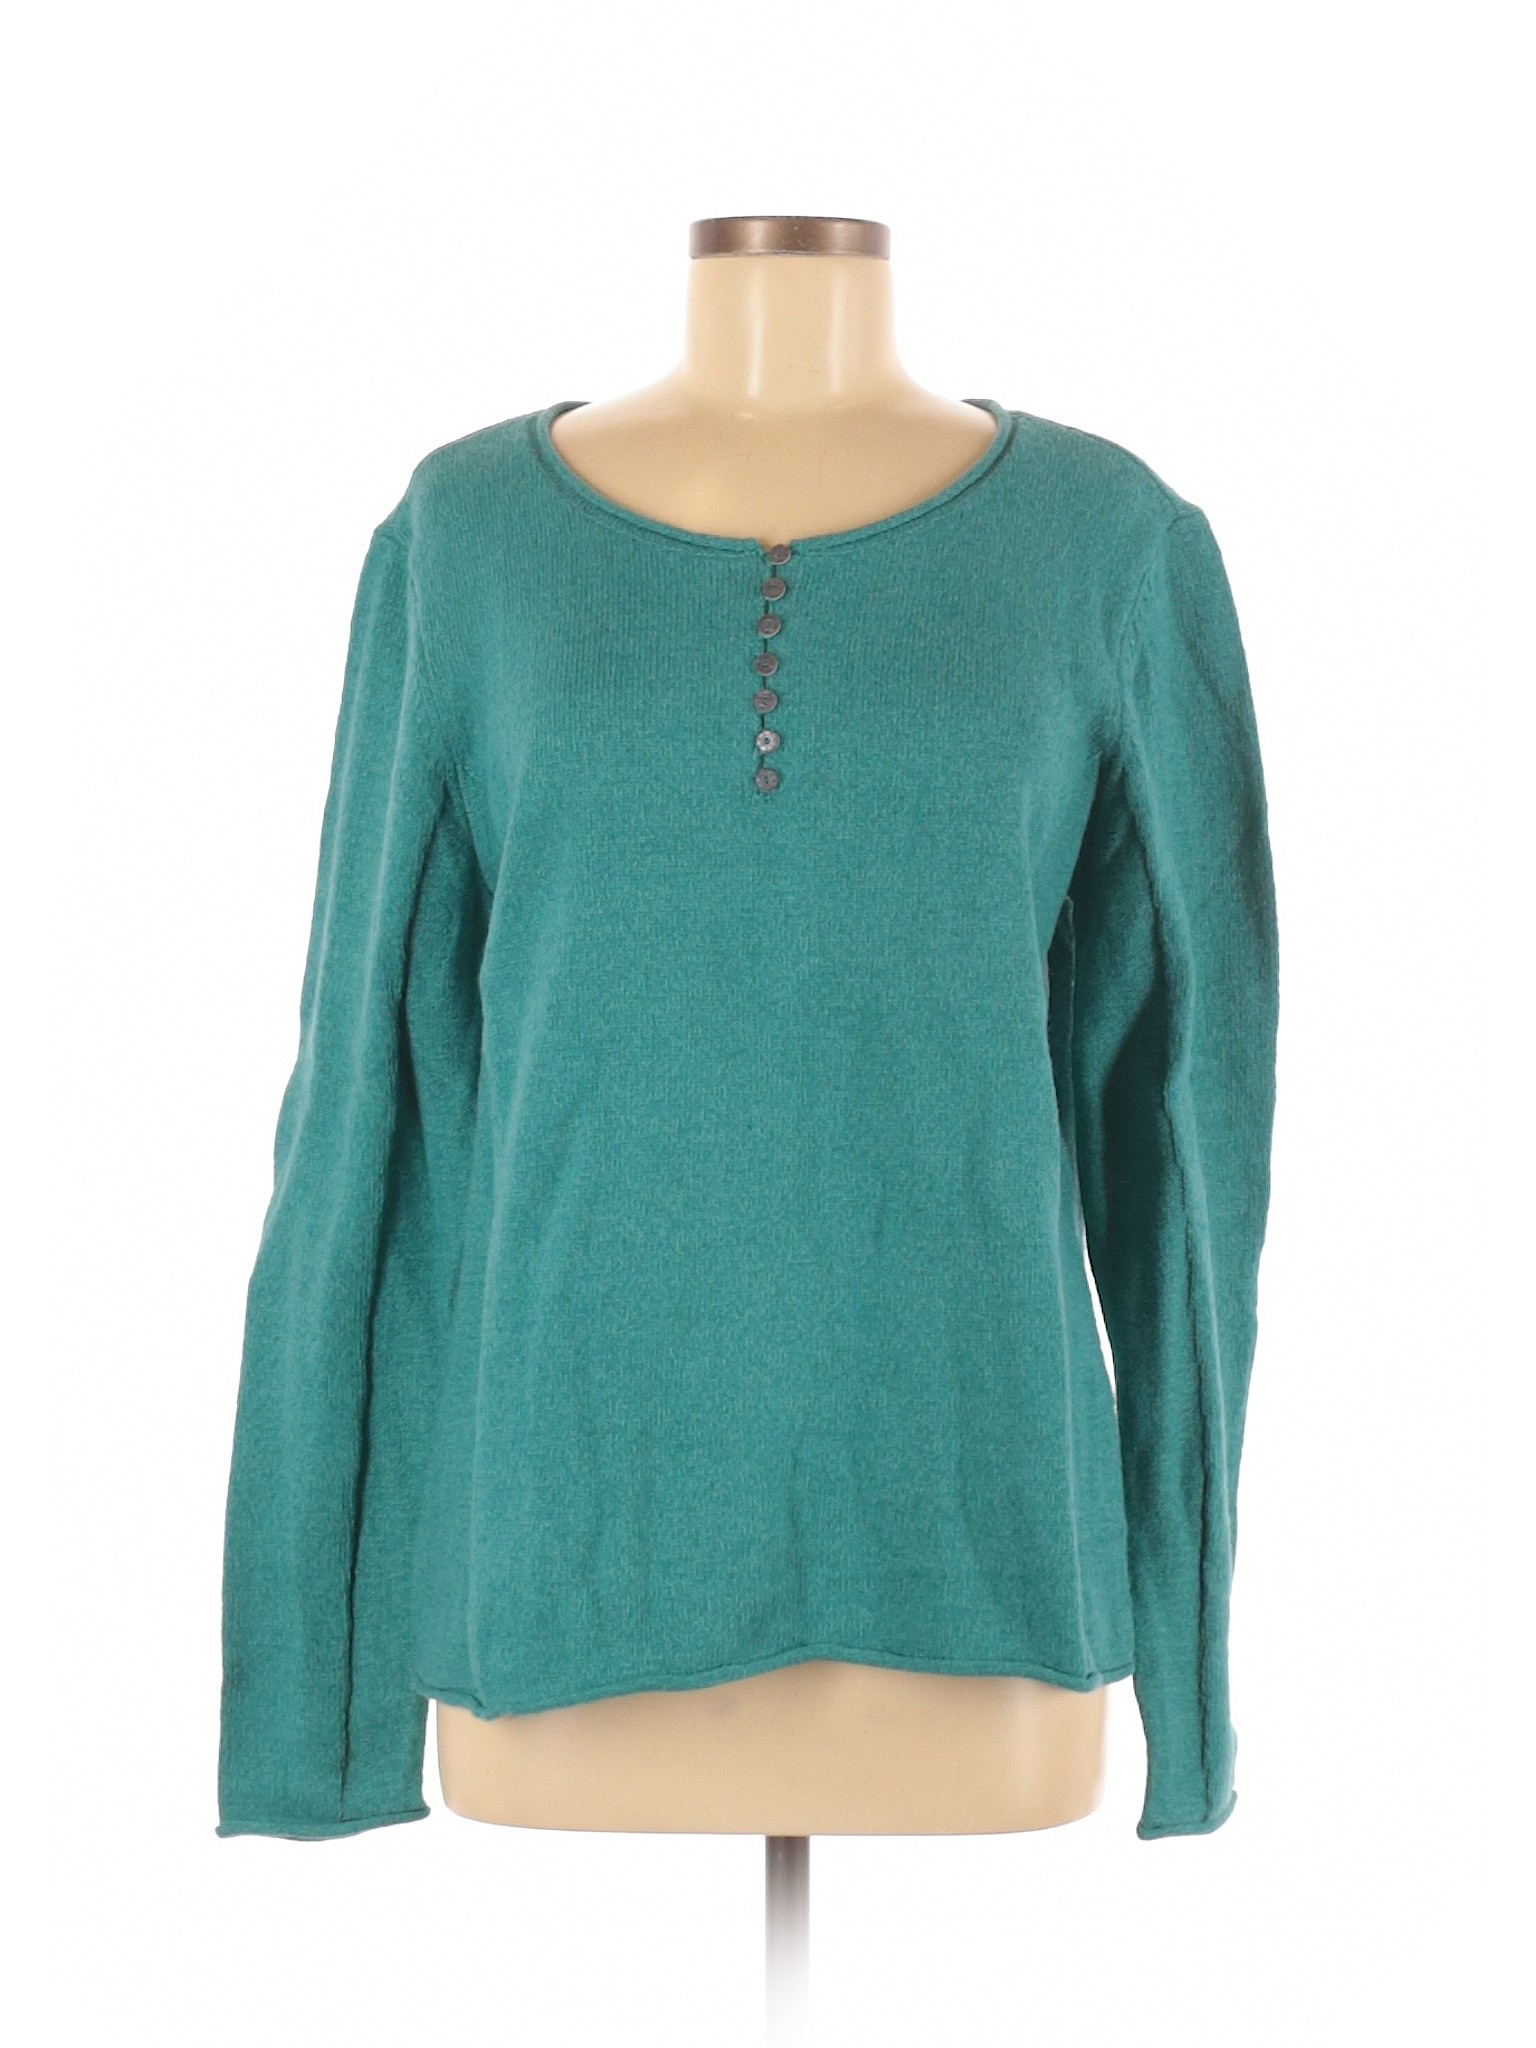 Sundance Women Green Pullover Sweater L | eBay